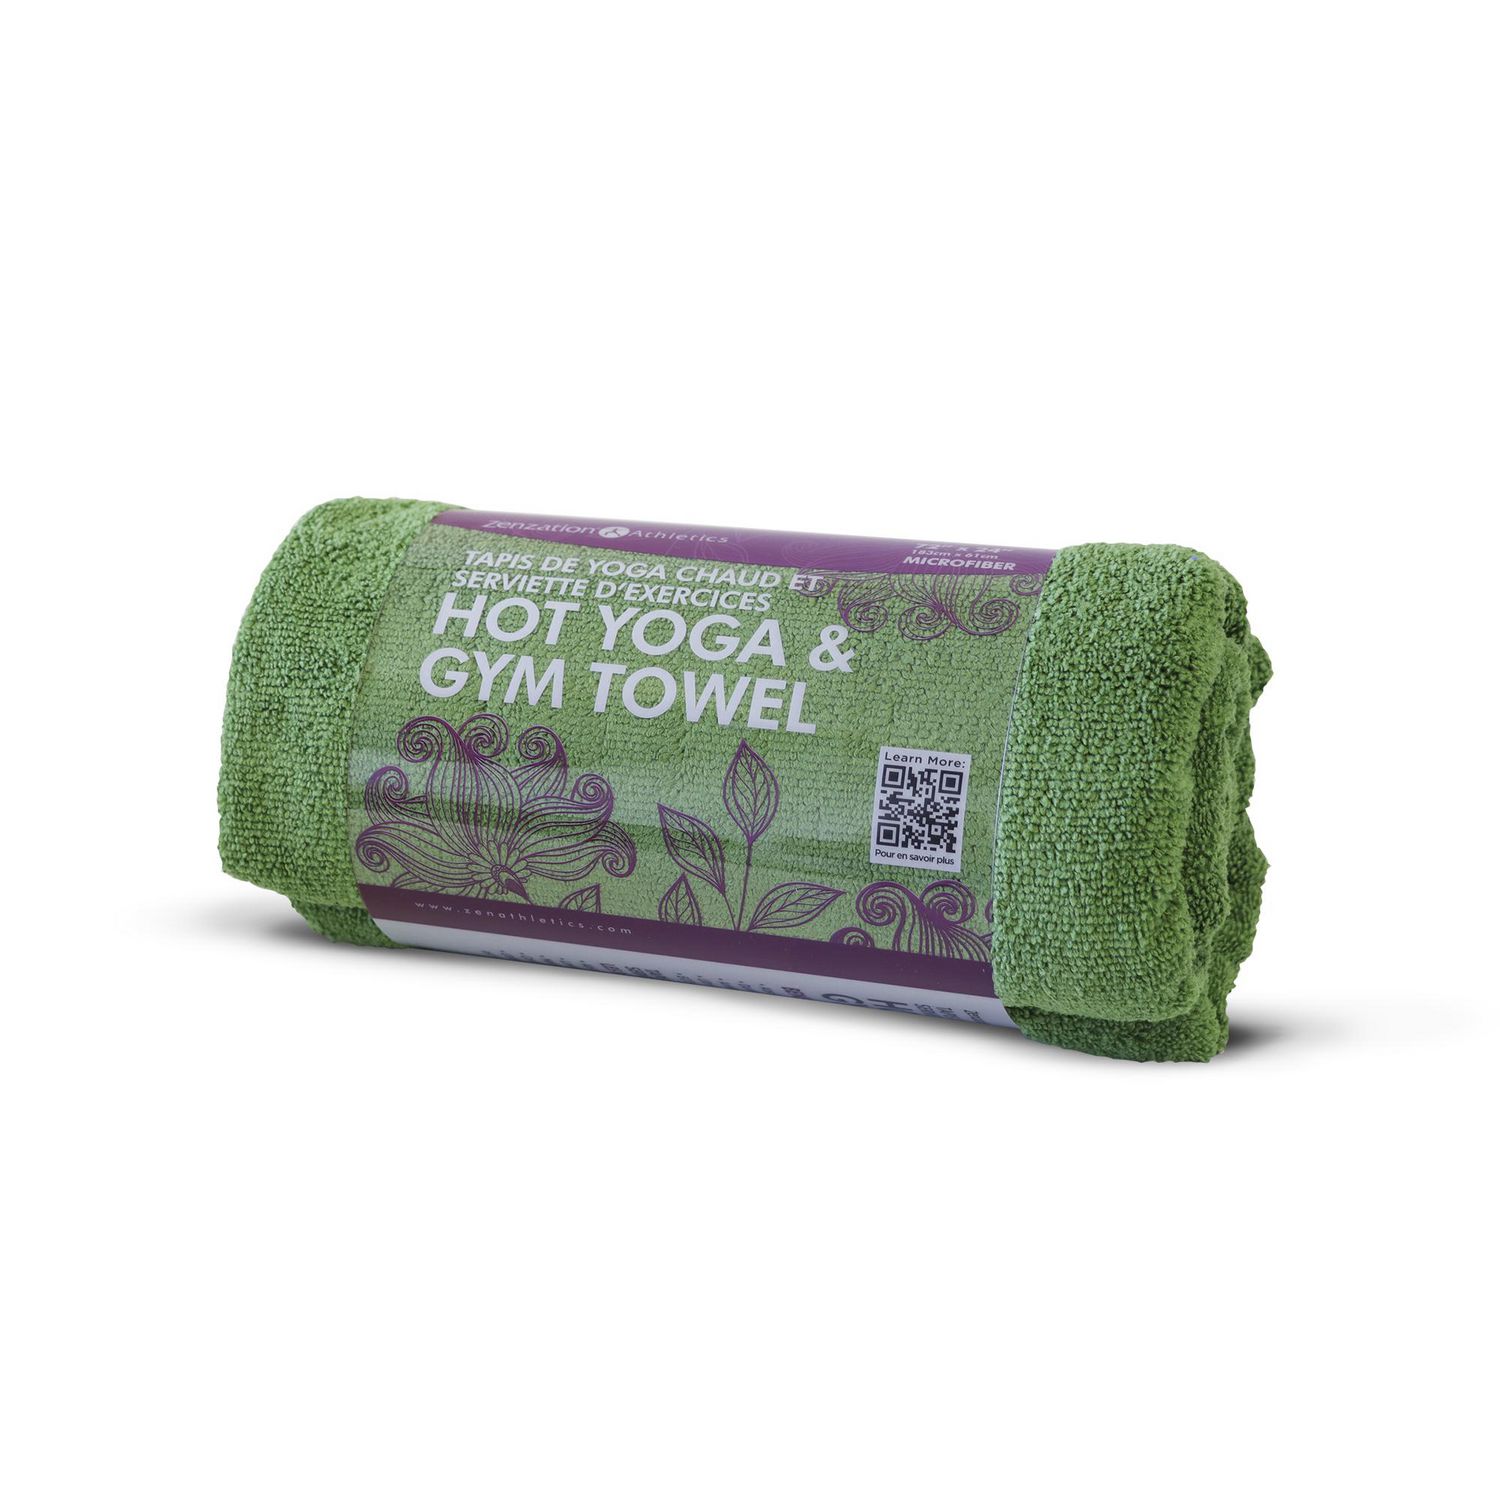 Zenzation Athletics Hot Yoga + Gym Towel